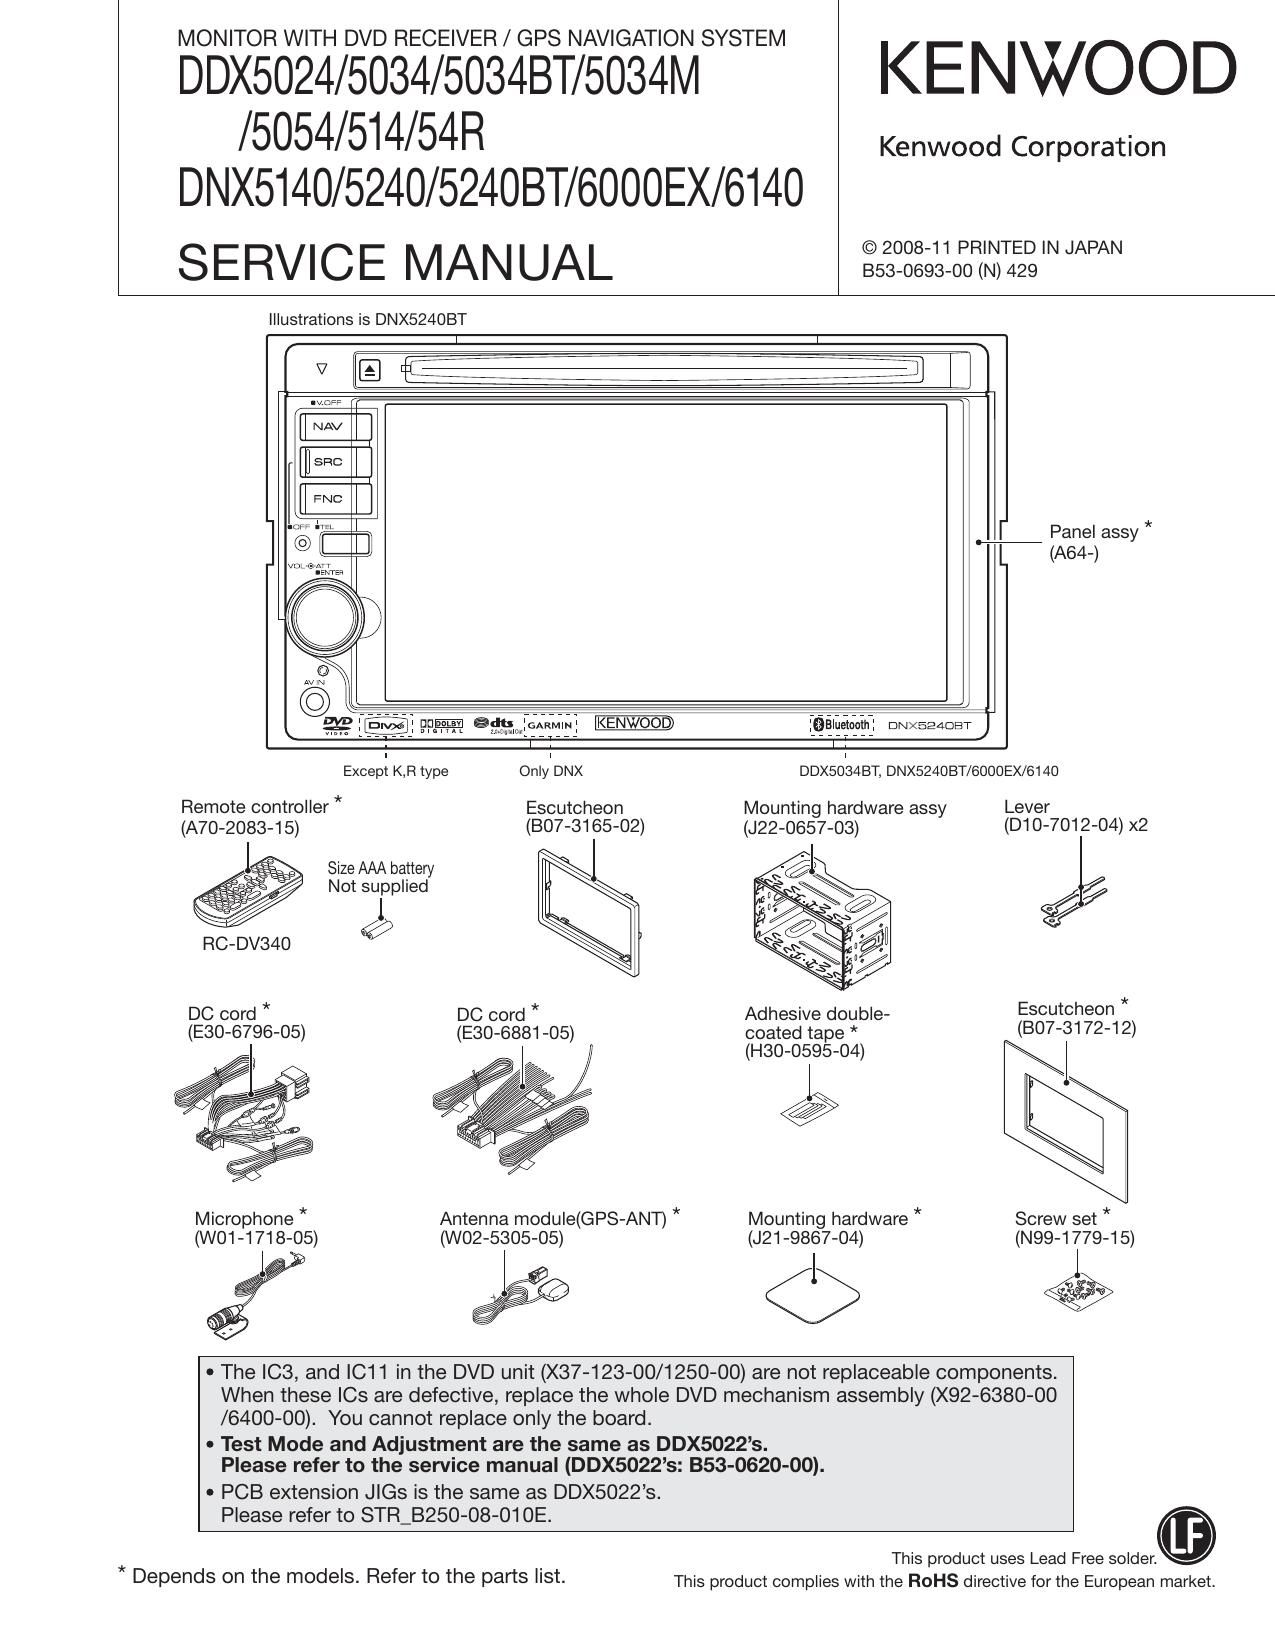 Kenwood DDX 514 HU Service Manual